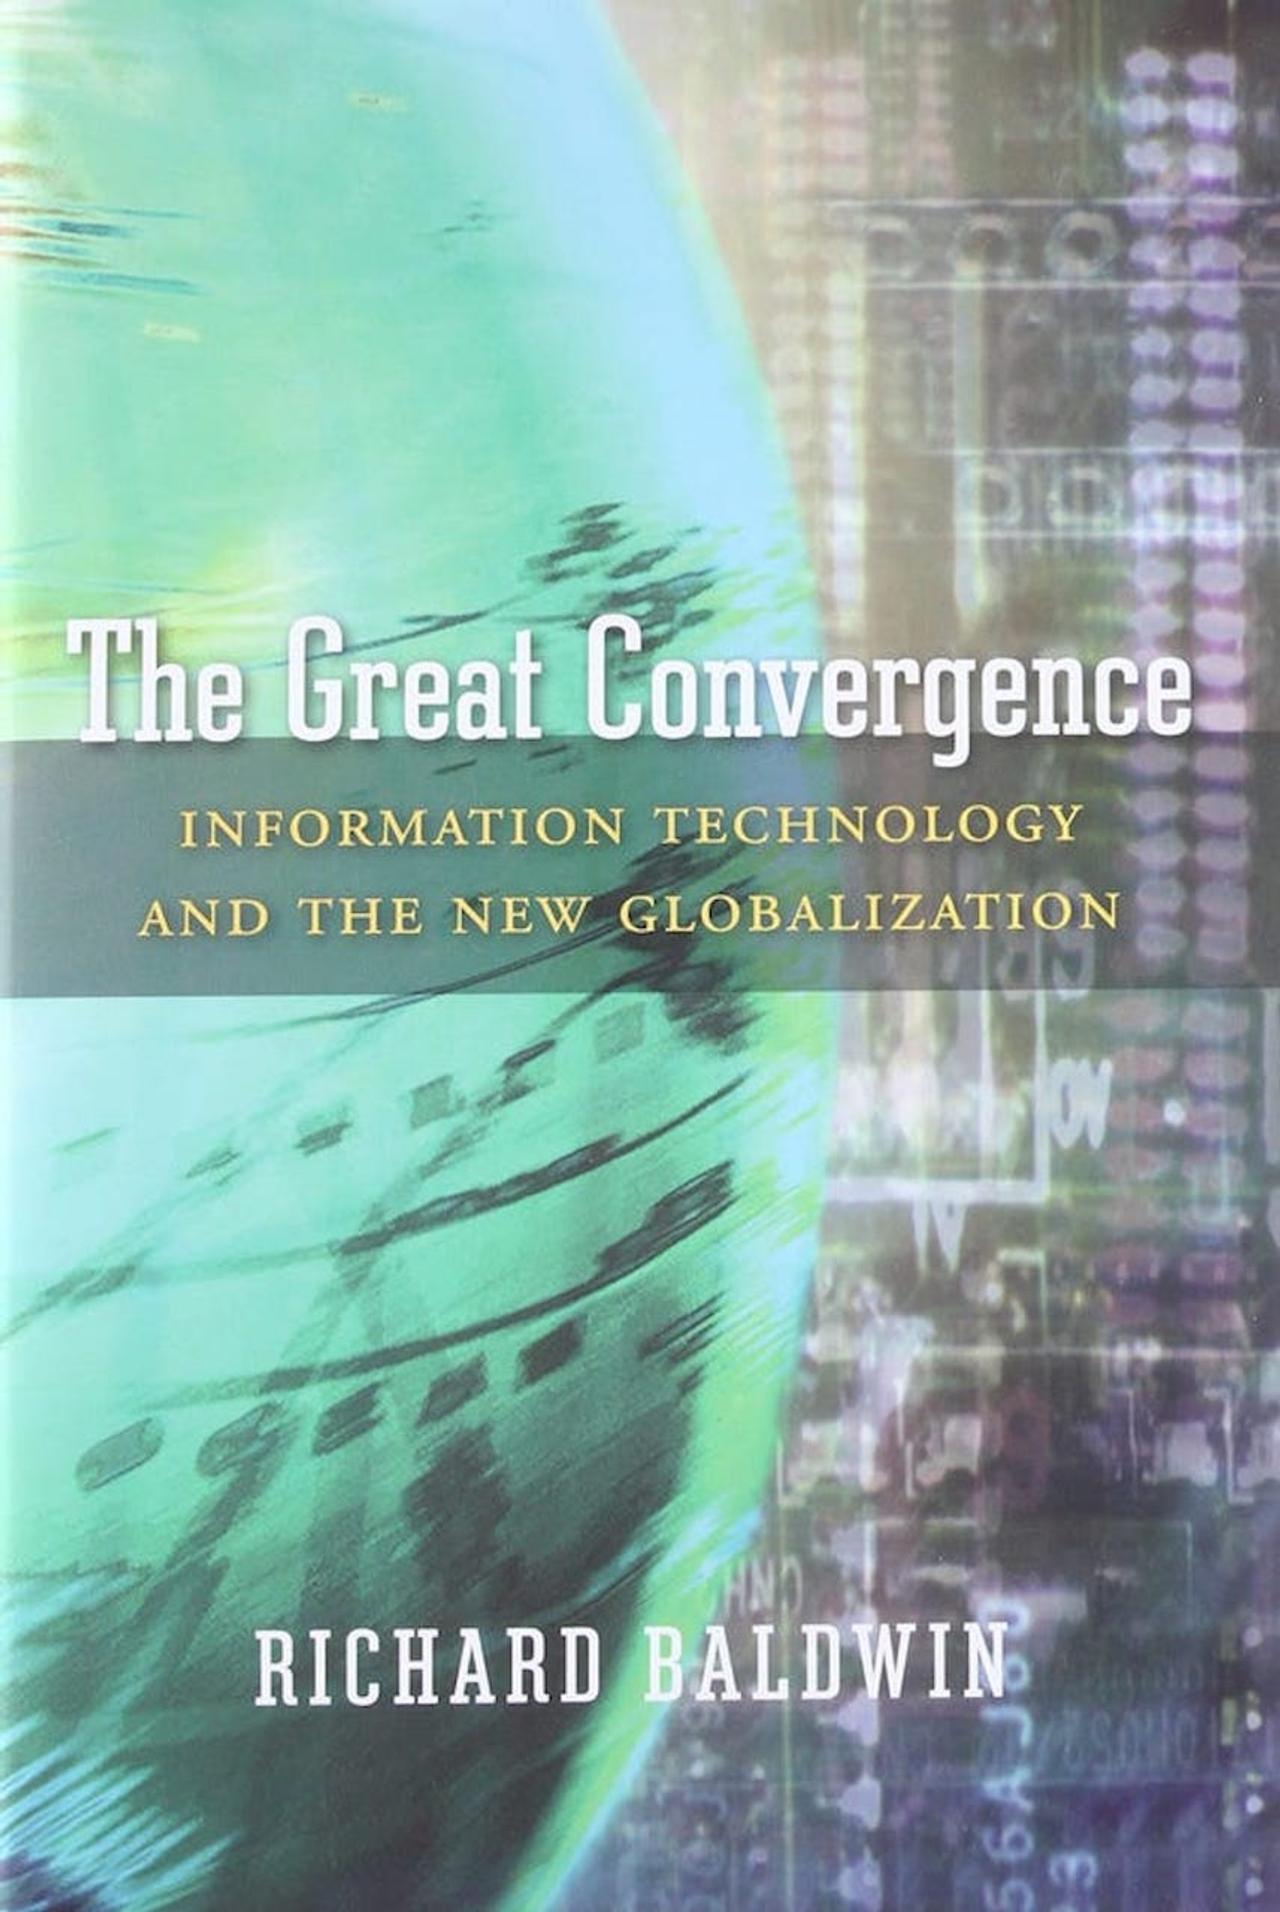 Richard Baldwin, The Great Convergence